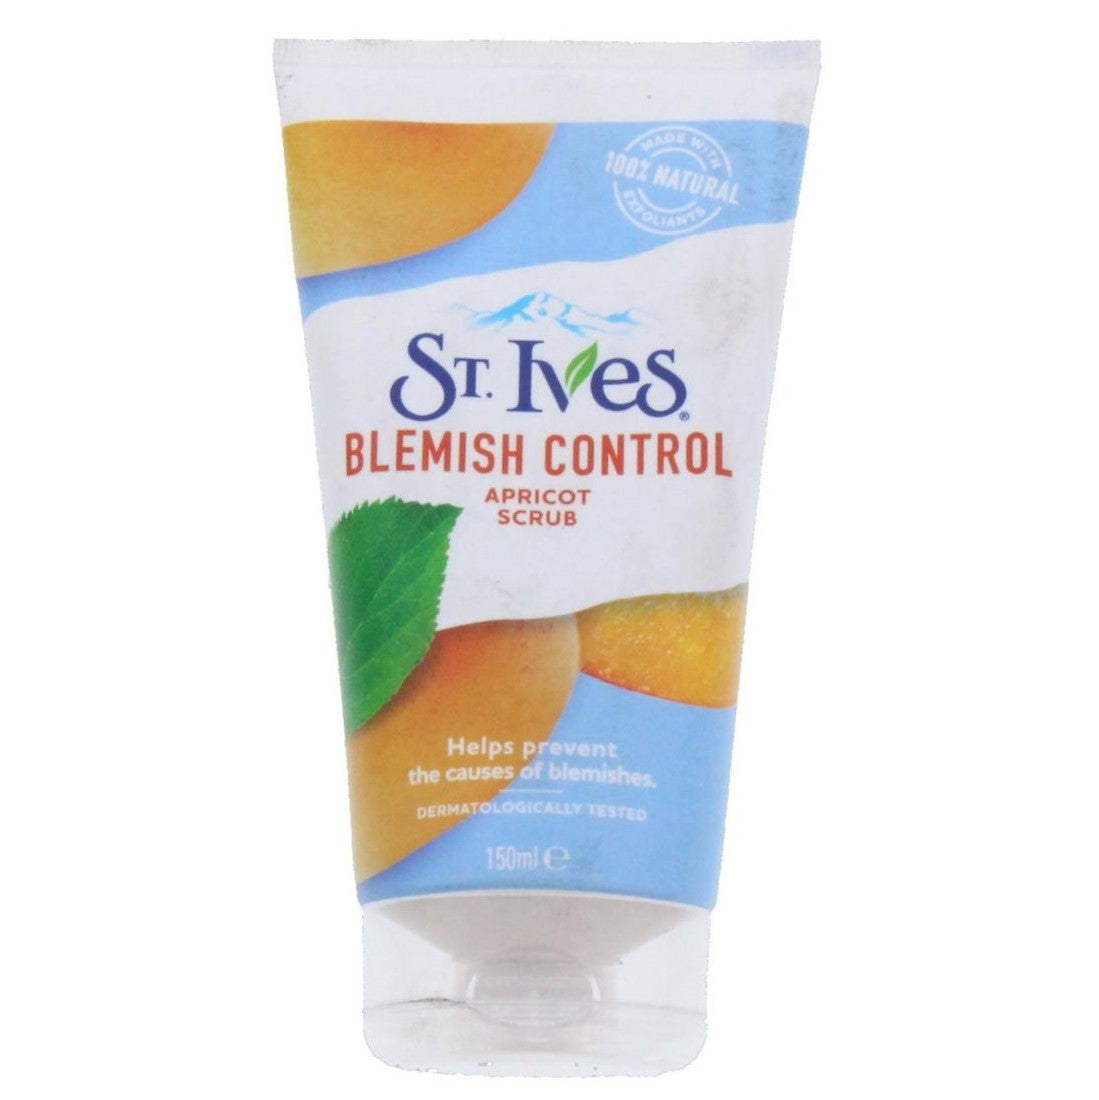 ST. Ives Blemish Control Apricot Scrub 6 oz